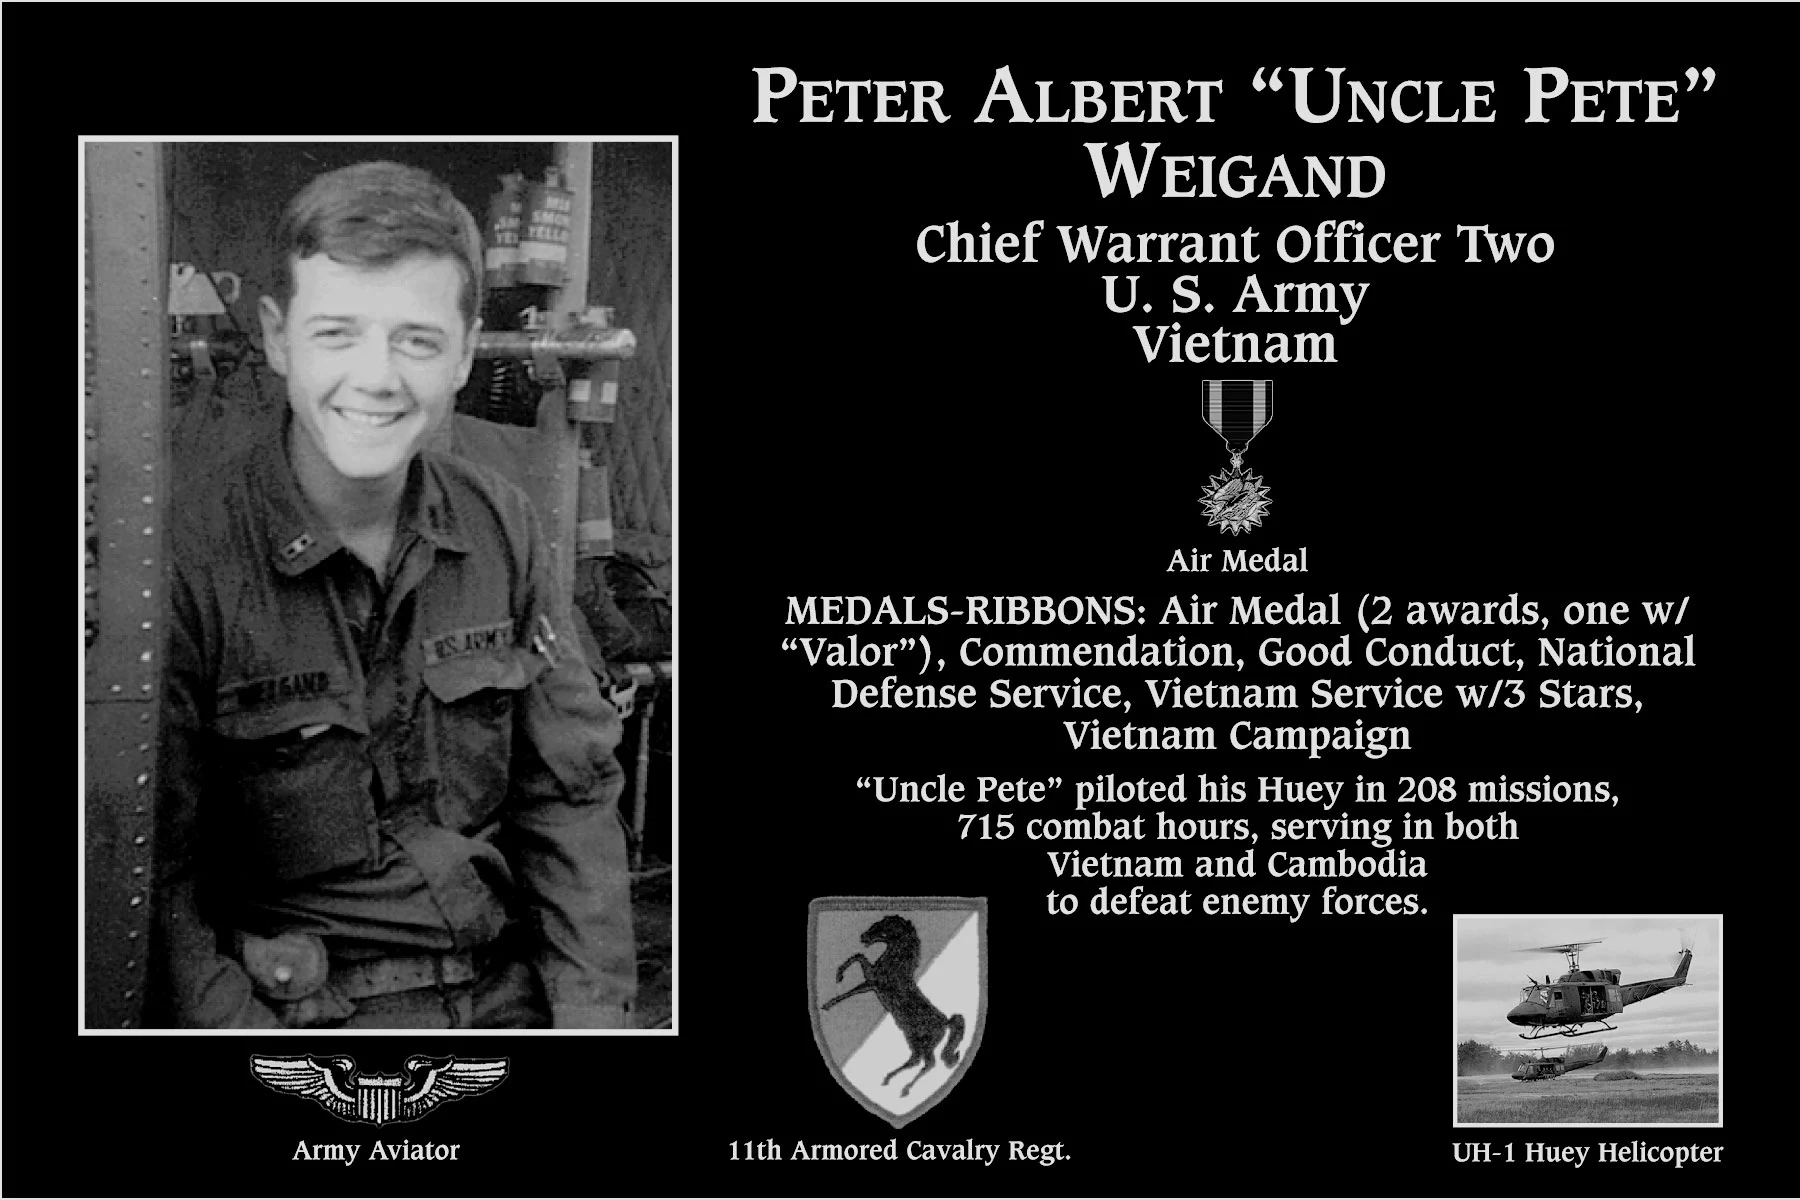 Peter Albert “Uncle Pete” Weigand